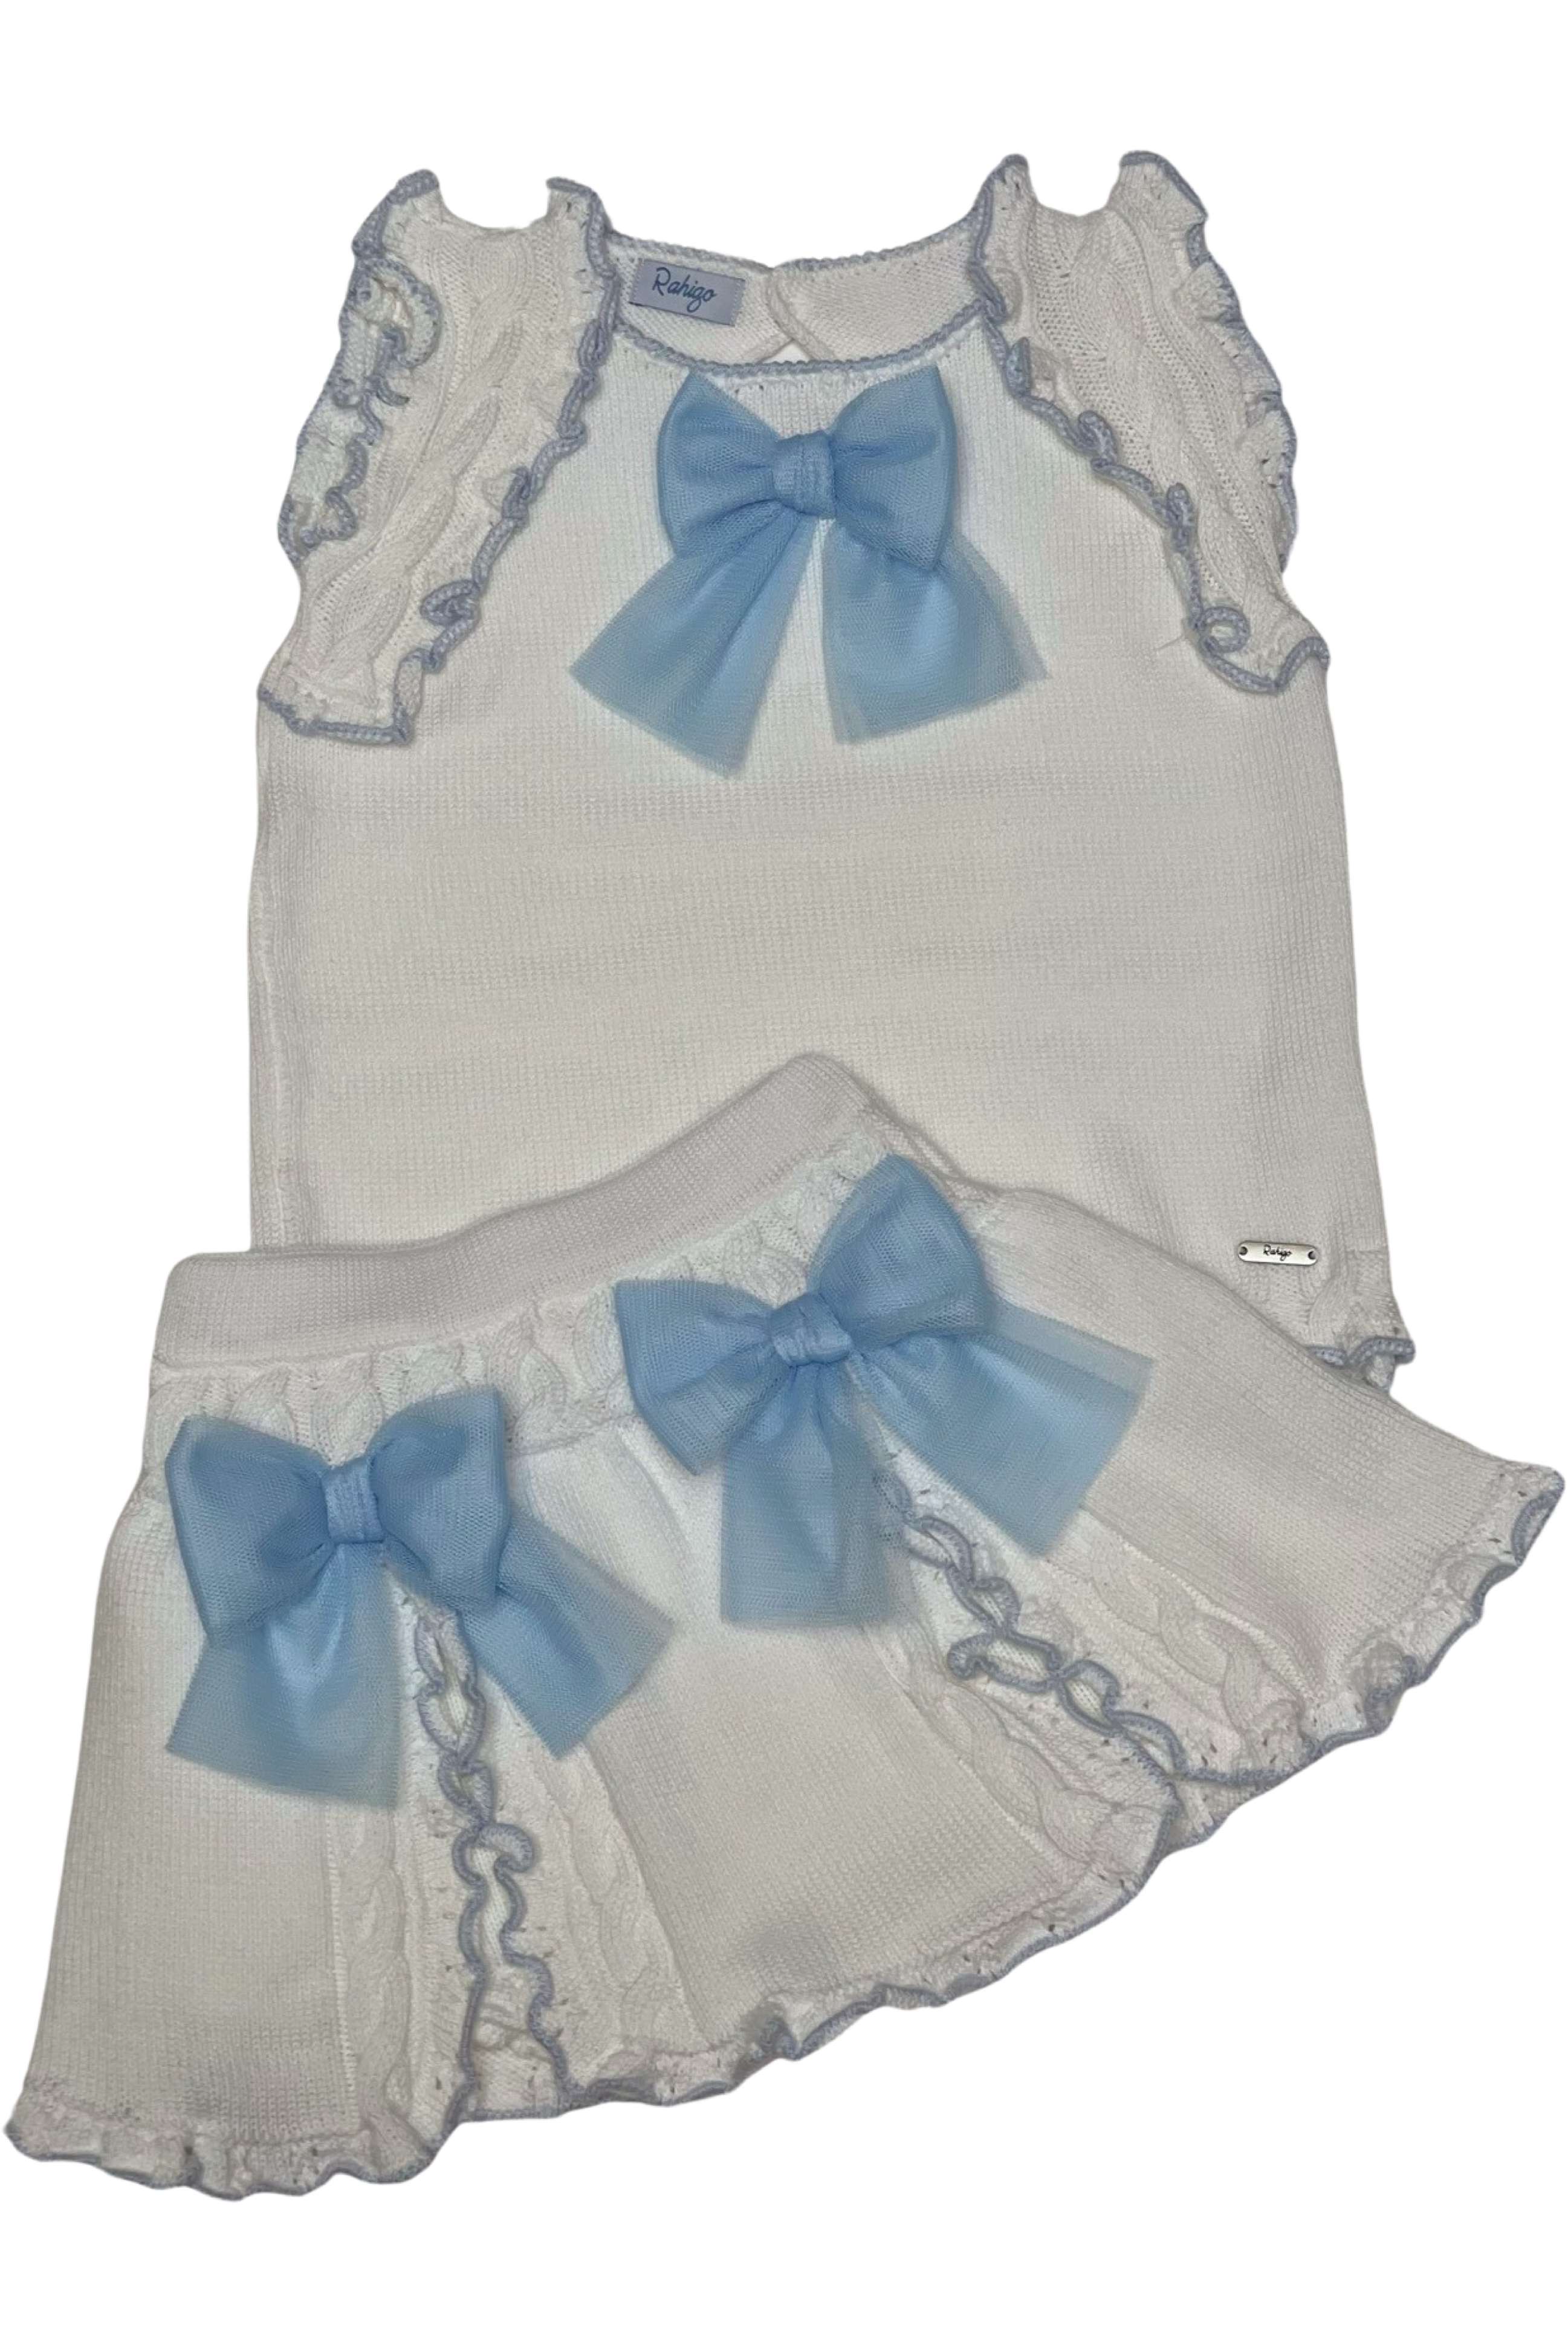 SS24 Rahigo Girls White & Baby Blue Skort Set Dainty Delilah